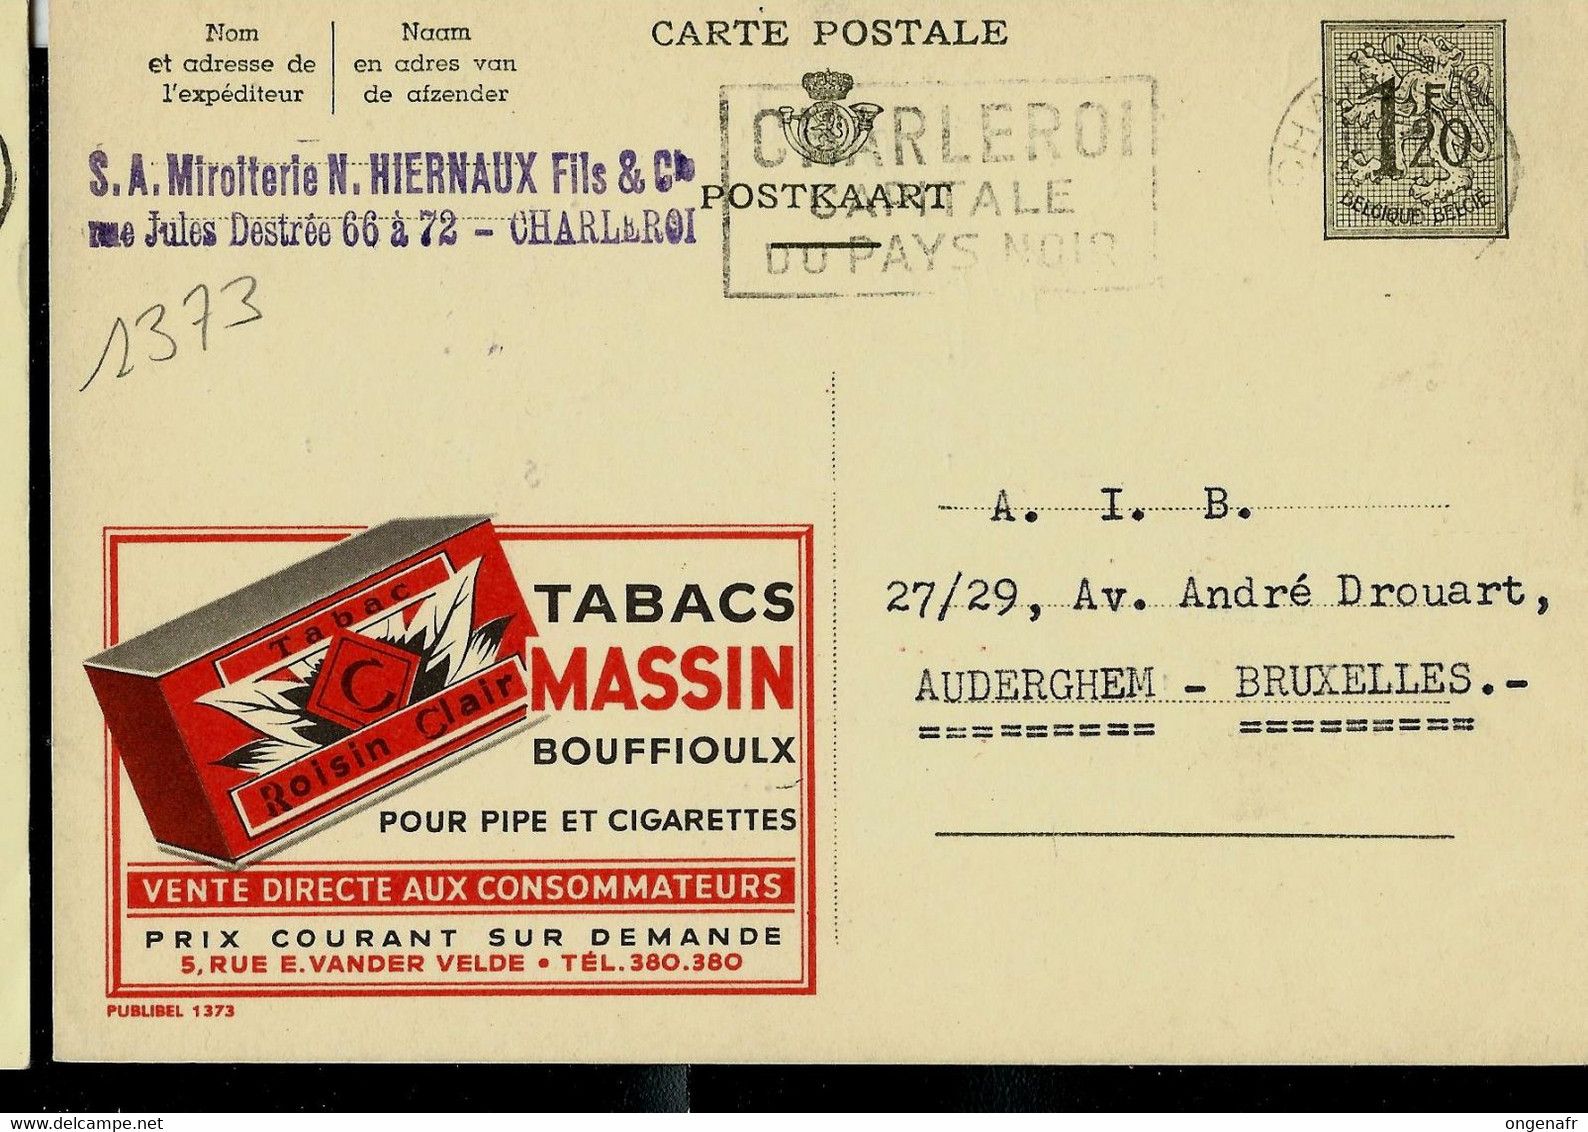 Publibel Obl. N° 1373 ( Tabacs MASSIN - Bouffioulx - Pour Pipe Et Cigarettes) Obl. CHARLEROI  09/02/56 - Publibels